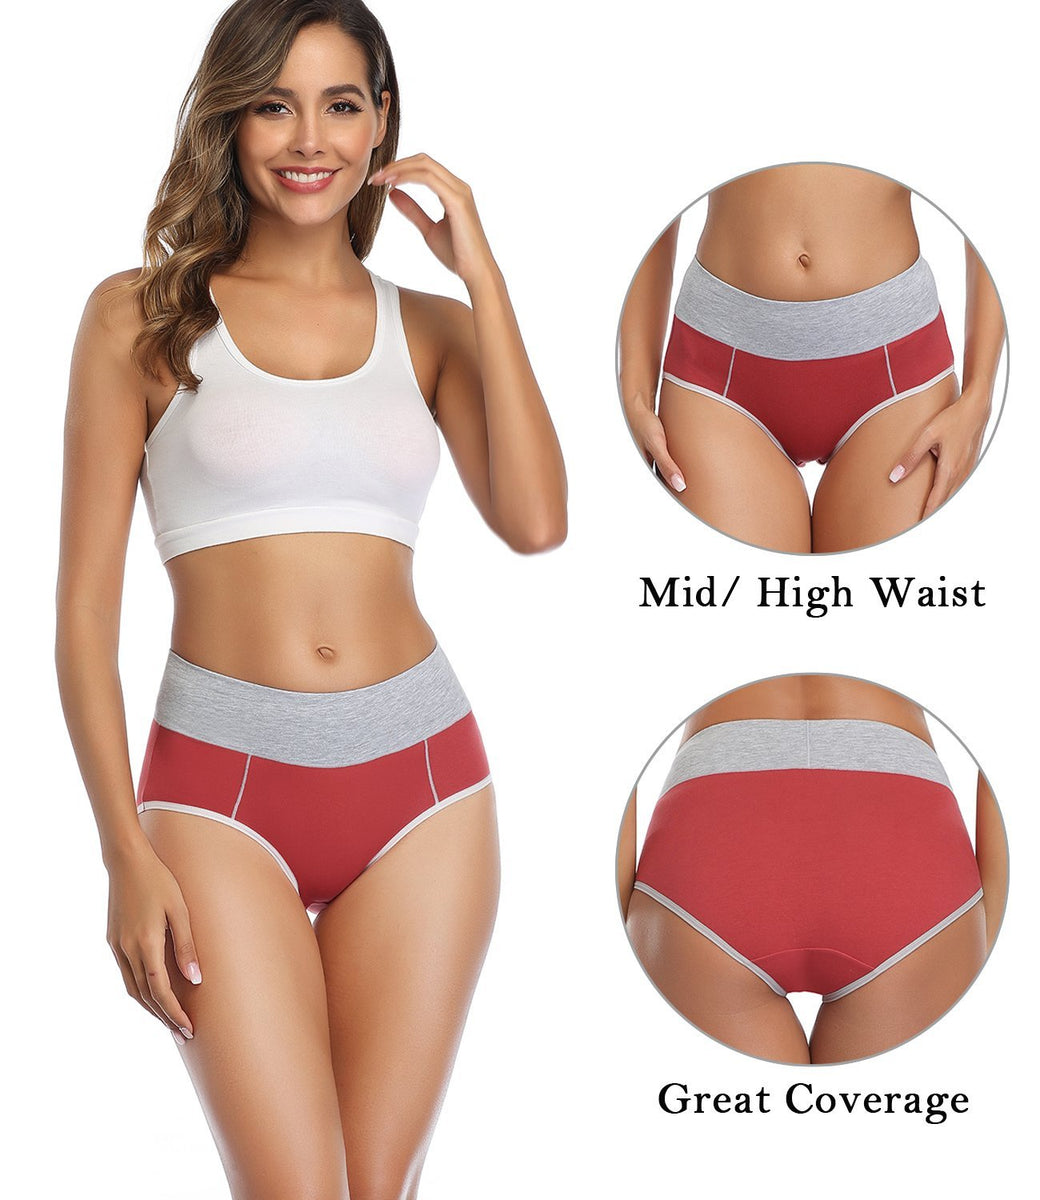 wirarpa Ladies High Waist Cotton Underwear with Beautiful Jacquard 4 Pack